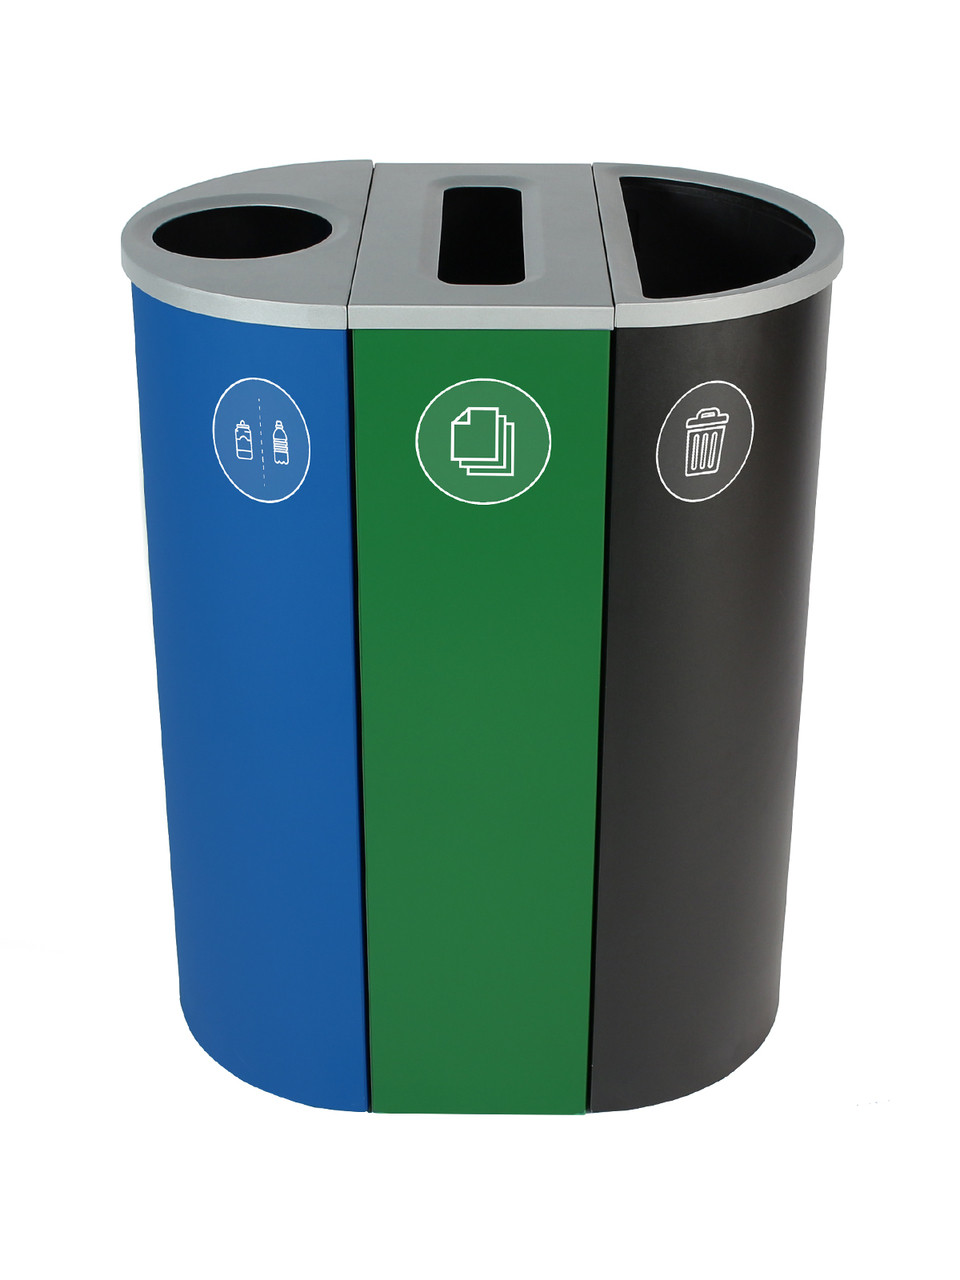 26 Gallon Spectrum Triple Recycling Station Blue/Green/Black 8107108-134